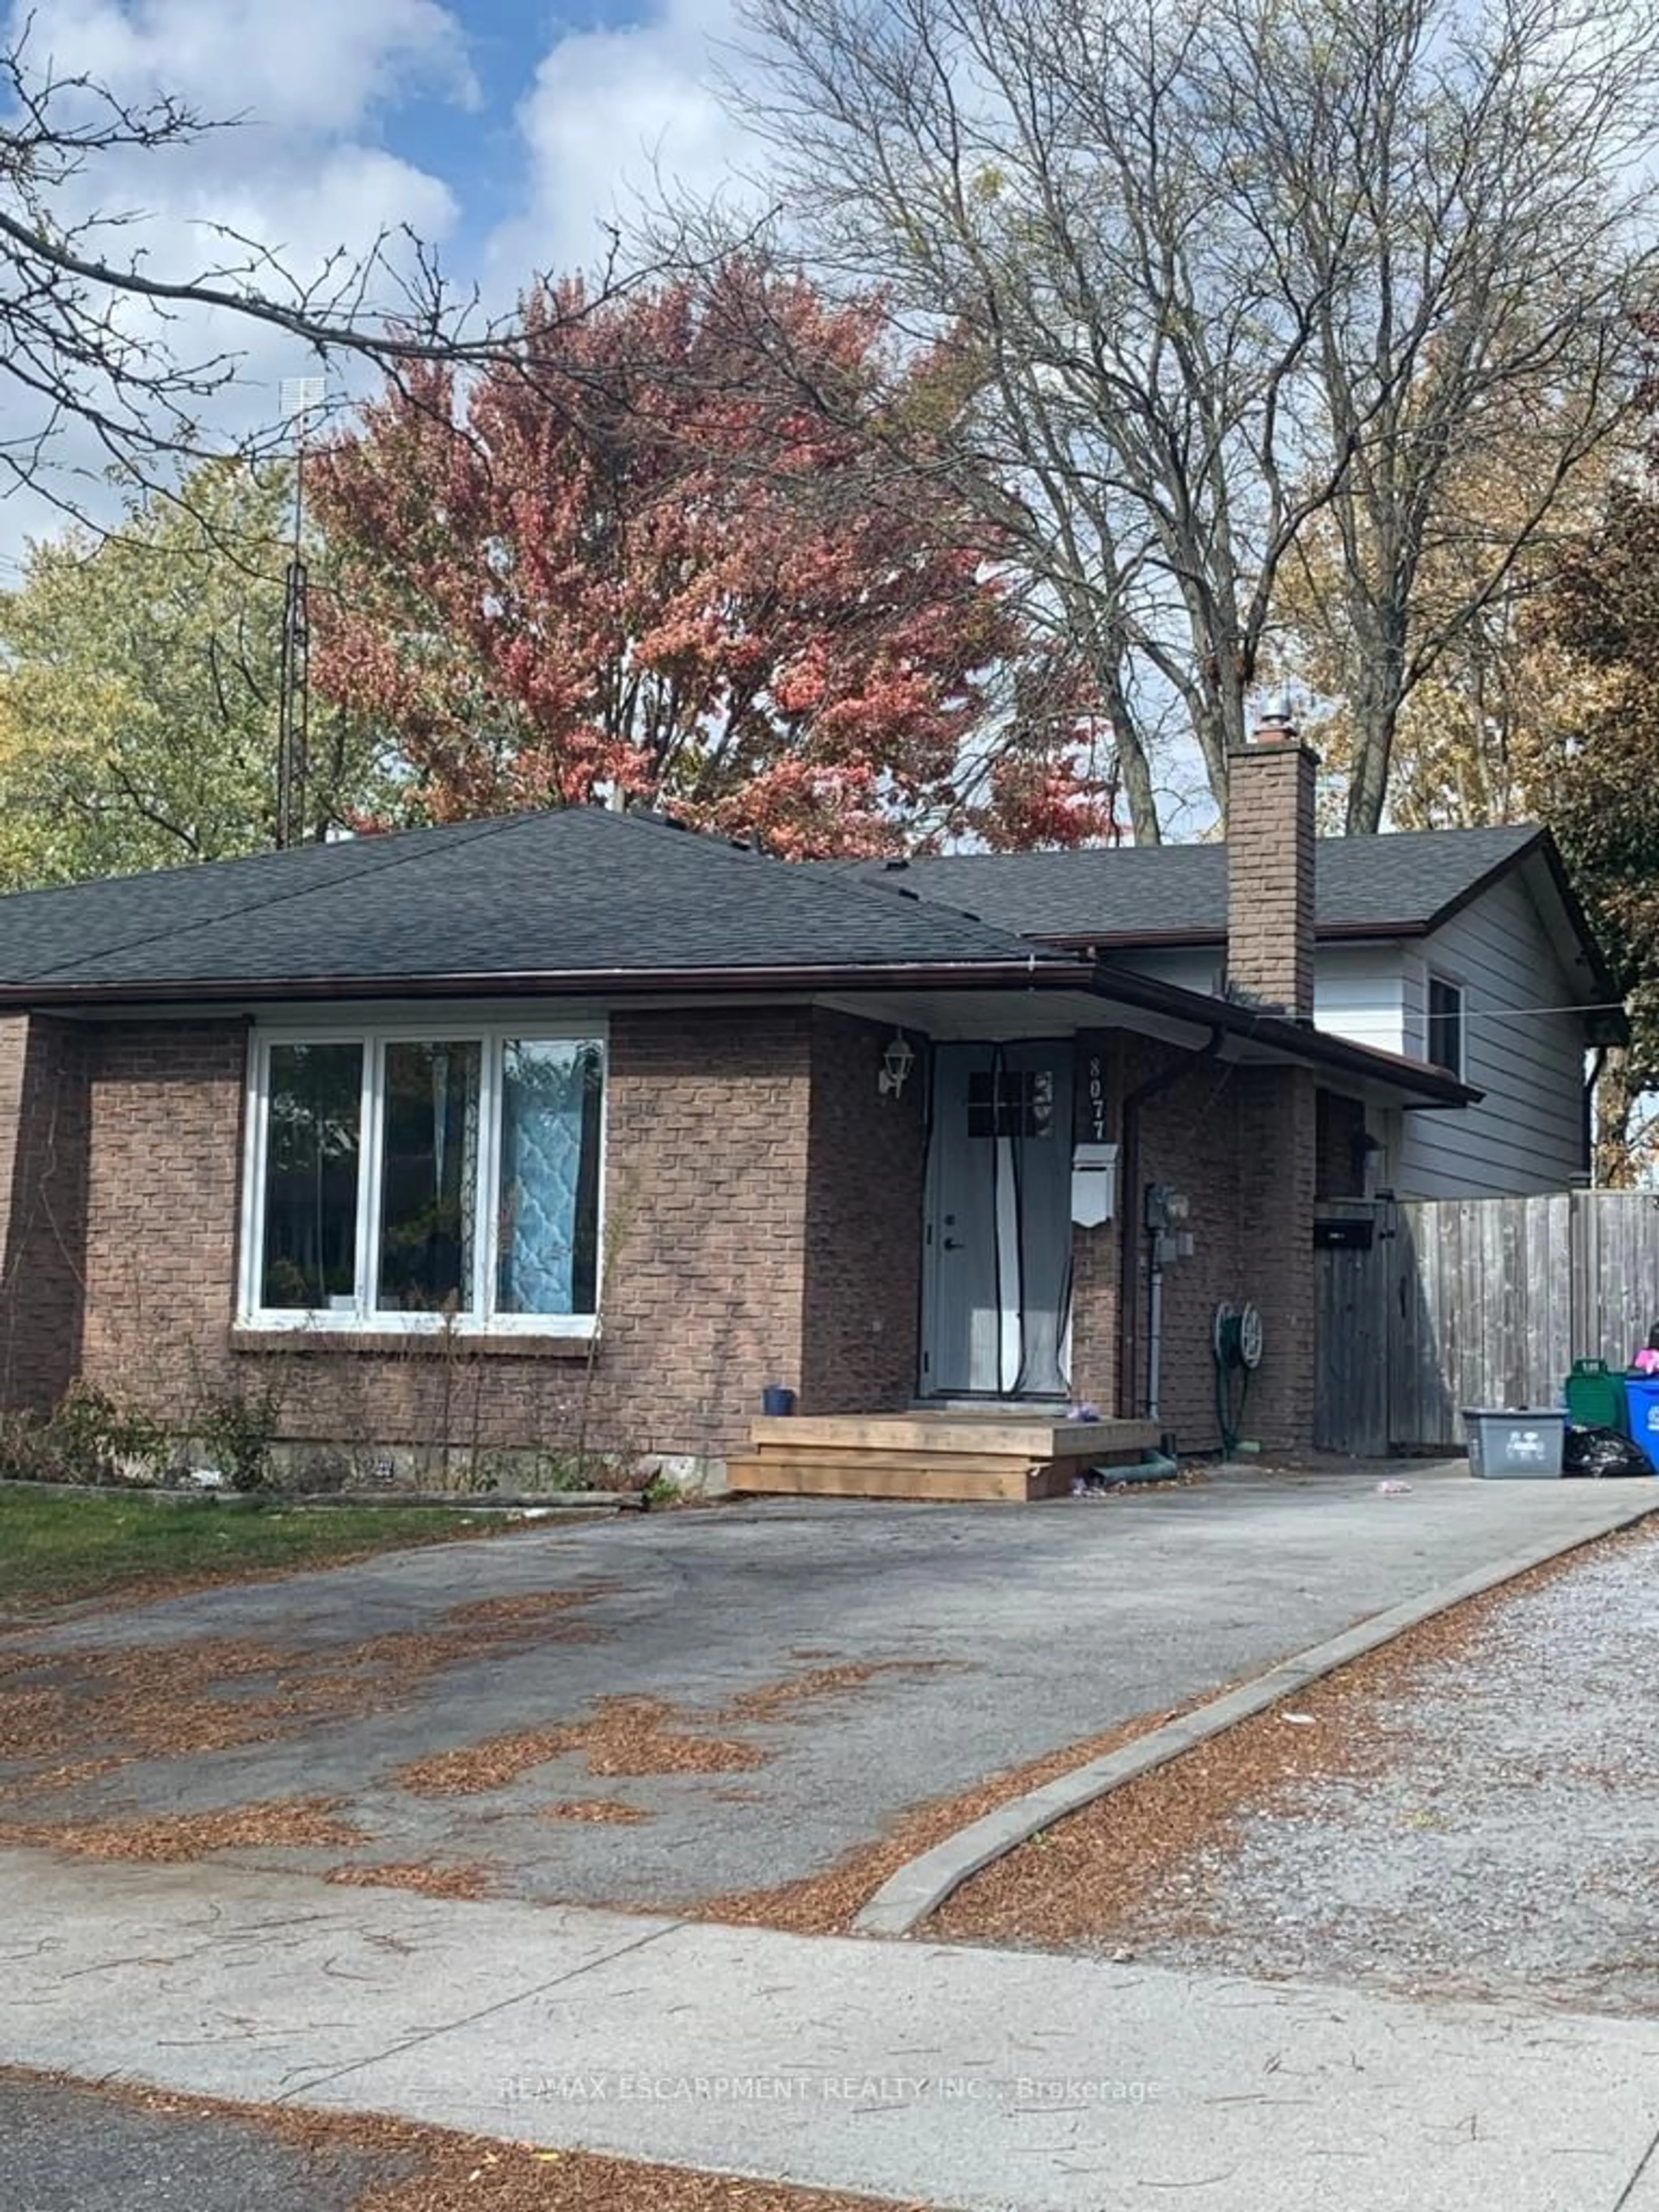 Home with brick exterior material for 8077 Aintree Dr, Niagara Falls Ontario L2H 1V3